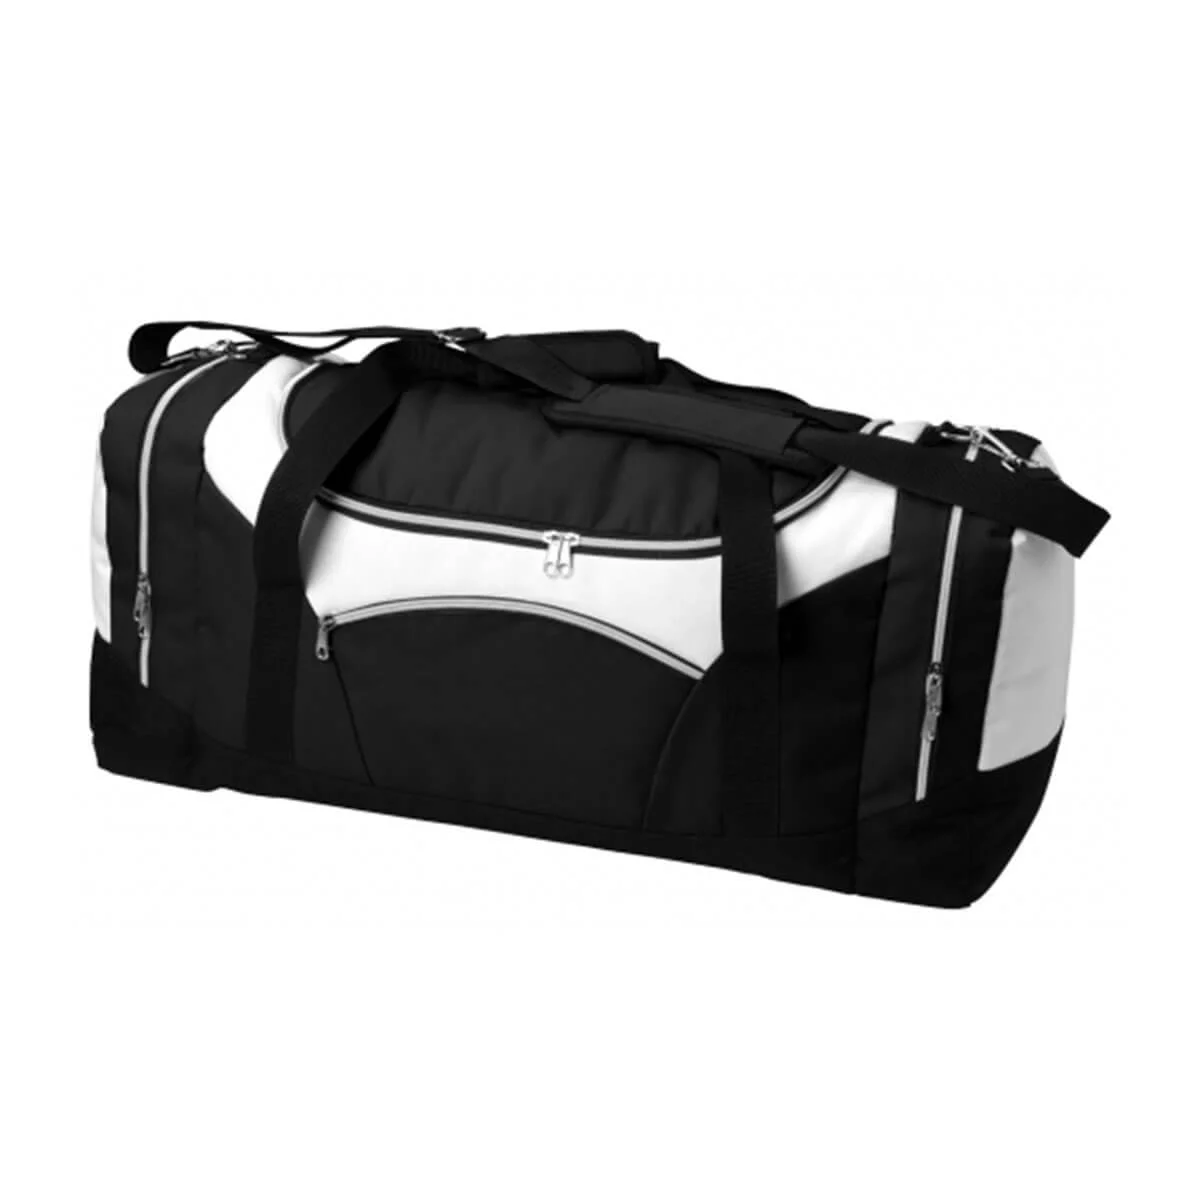 Stellar Sports Bag-Black / White